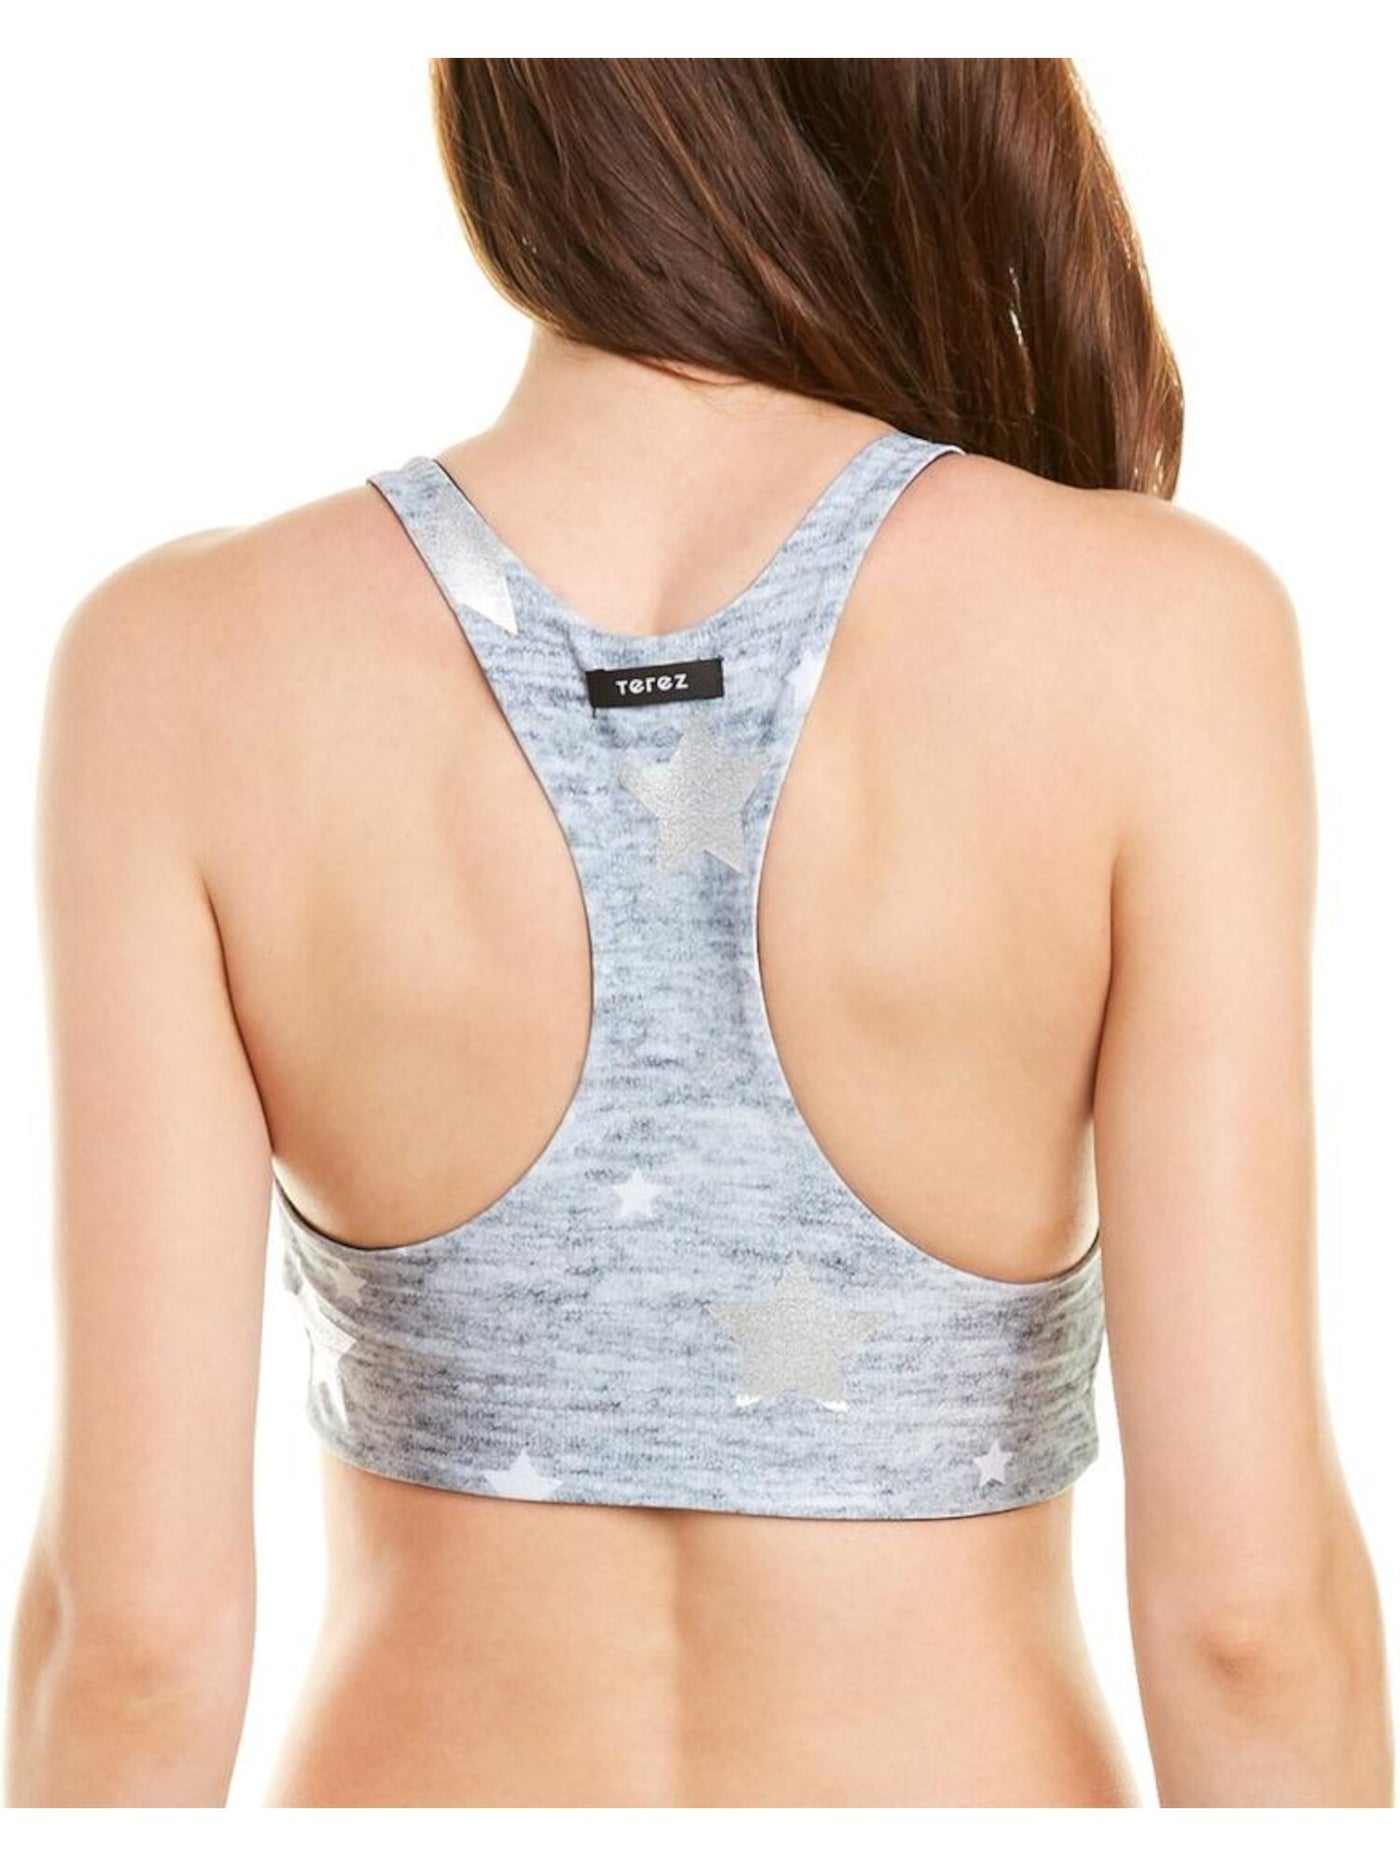 Terez Intimates Gray Polyester Elastic Band Sleepwear Sports Bra Size: M